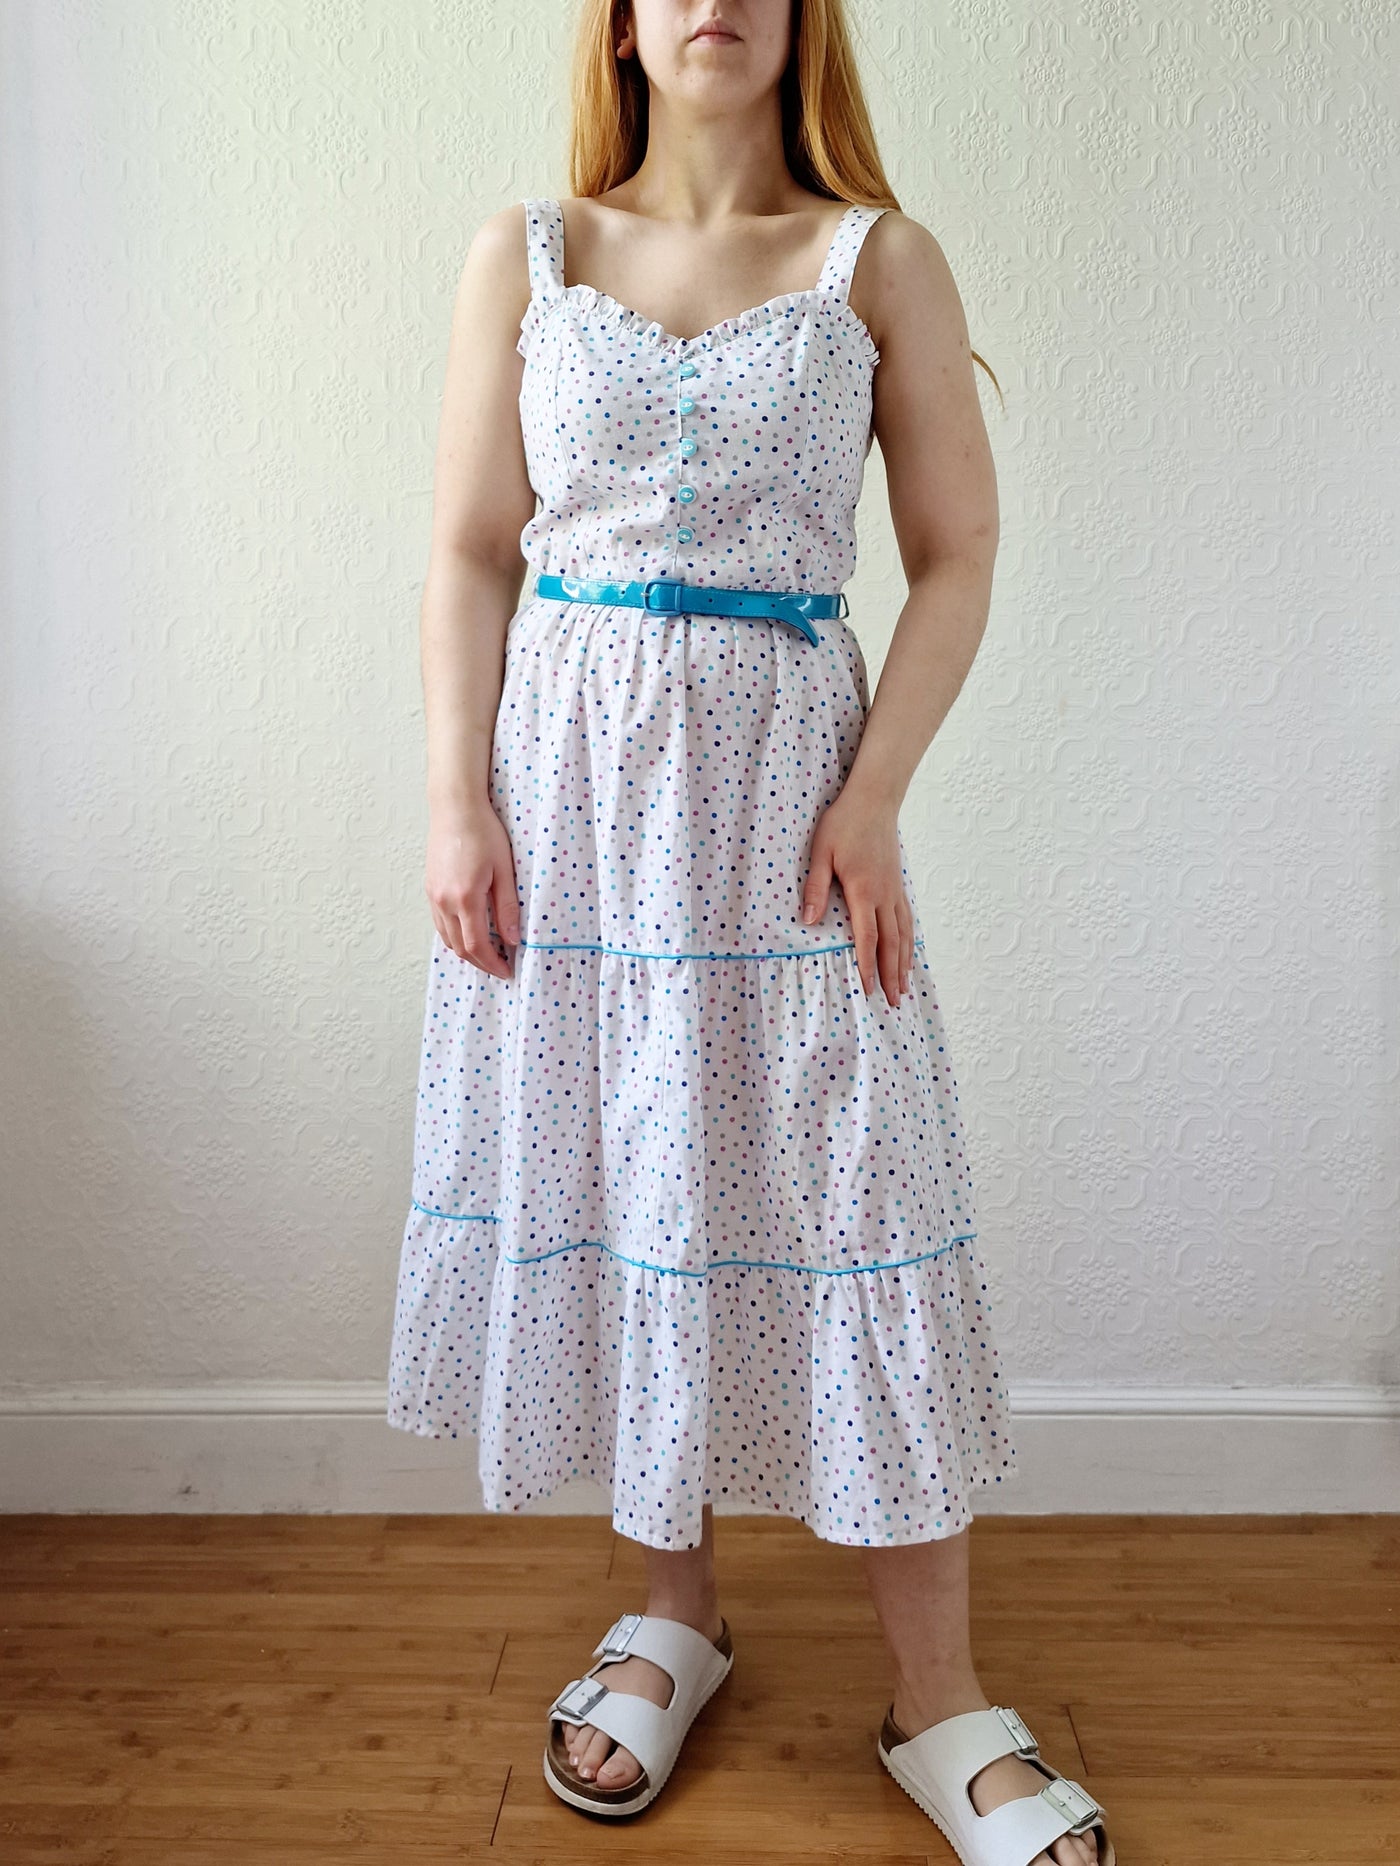 Vintage 80s White Sleeveless Sundress with Blue Polka Dots - XS/S